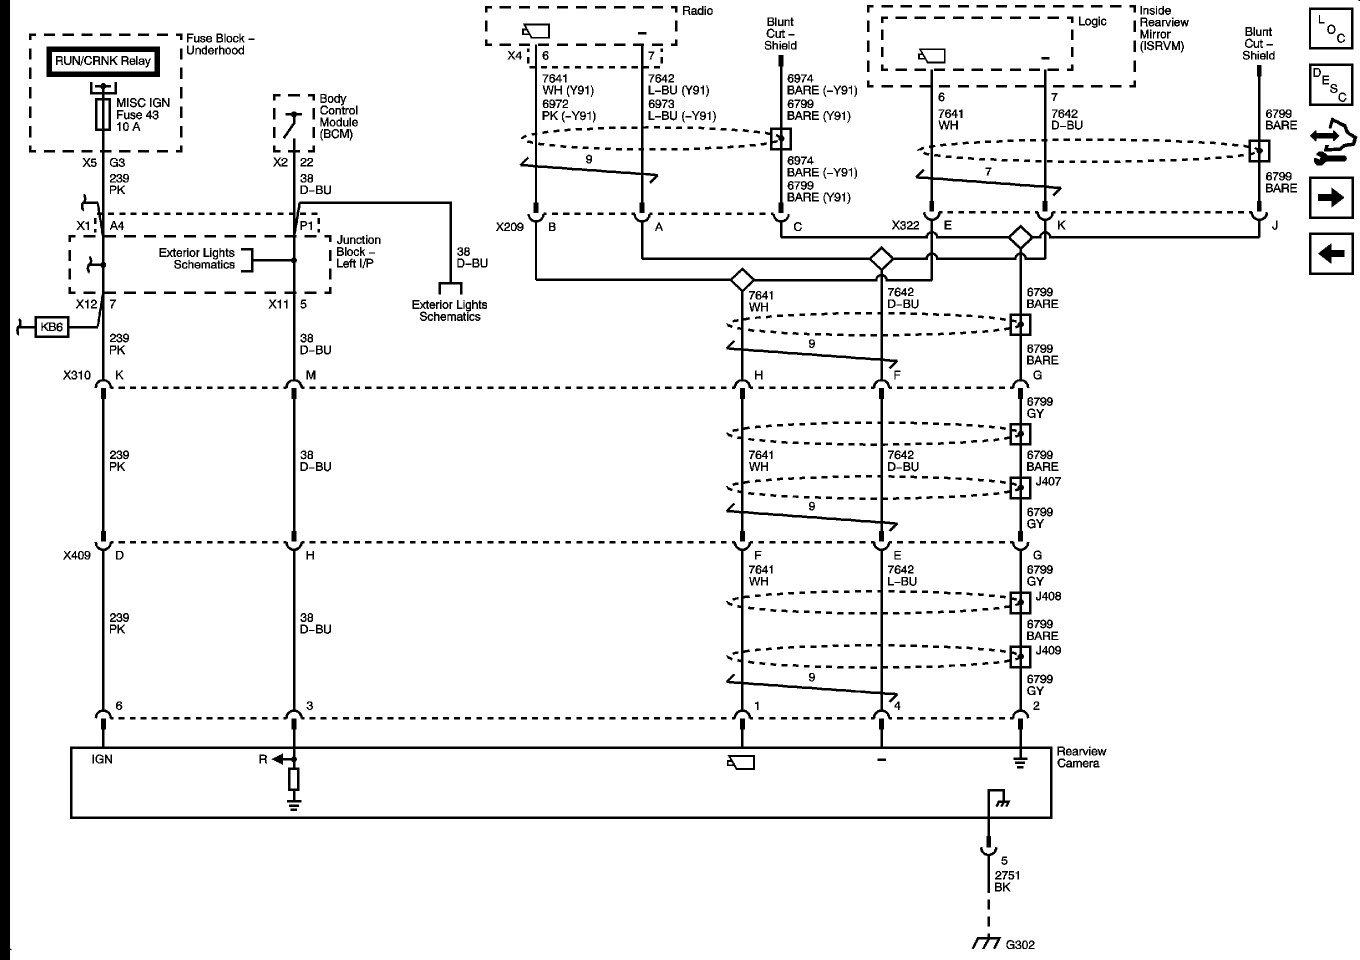 gentex 177 wiring diagram